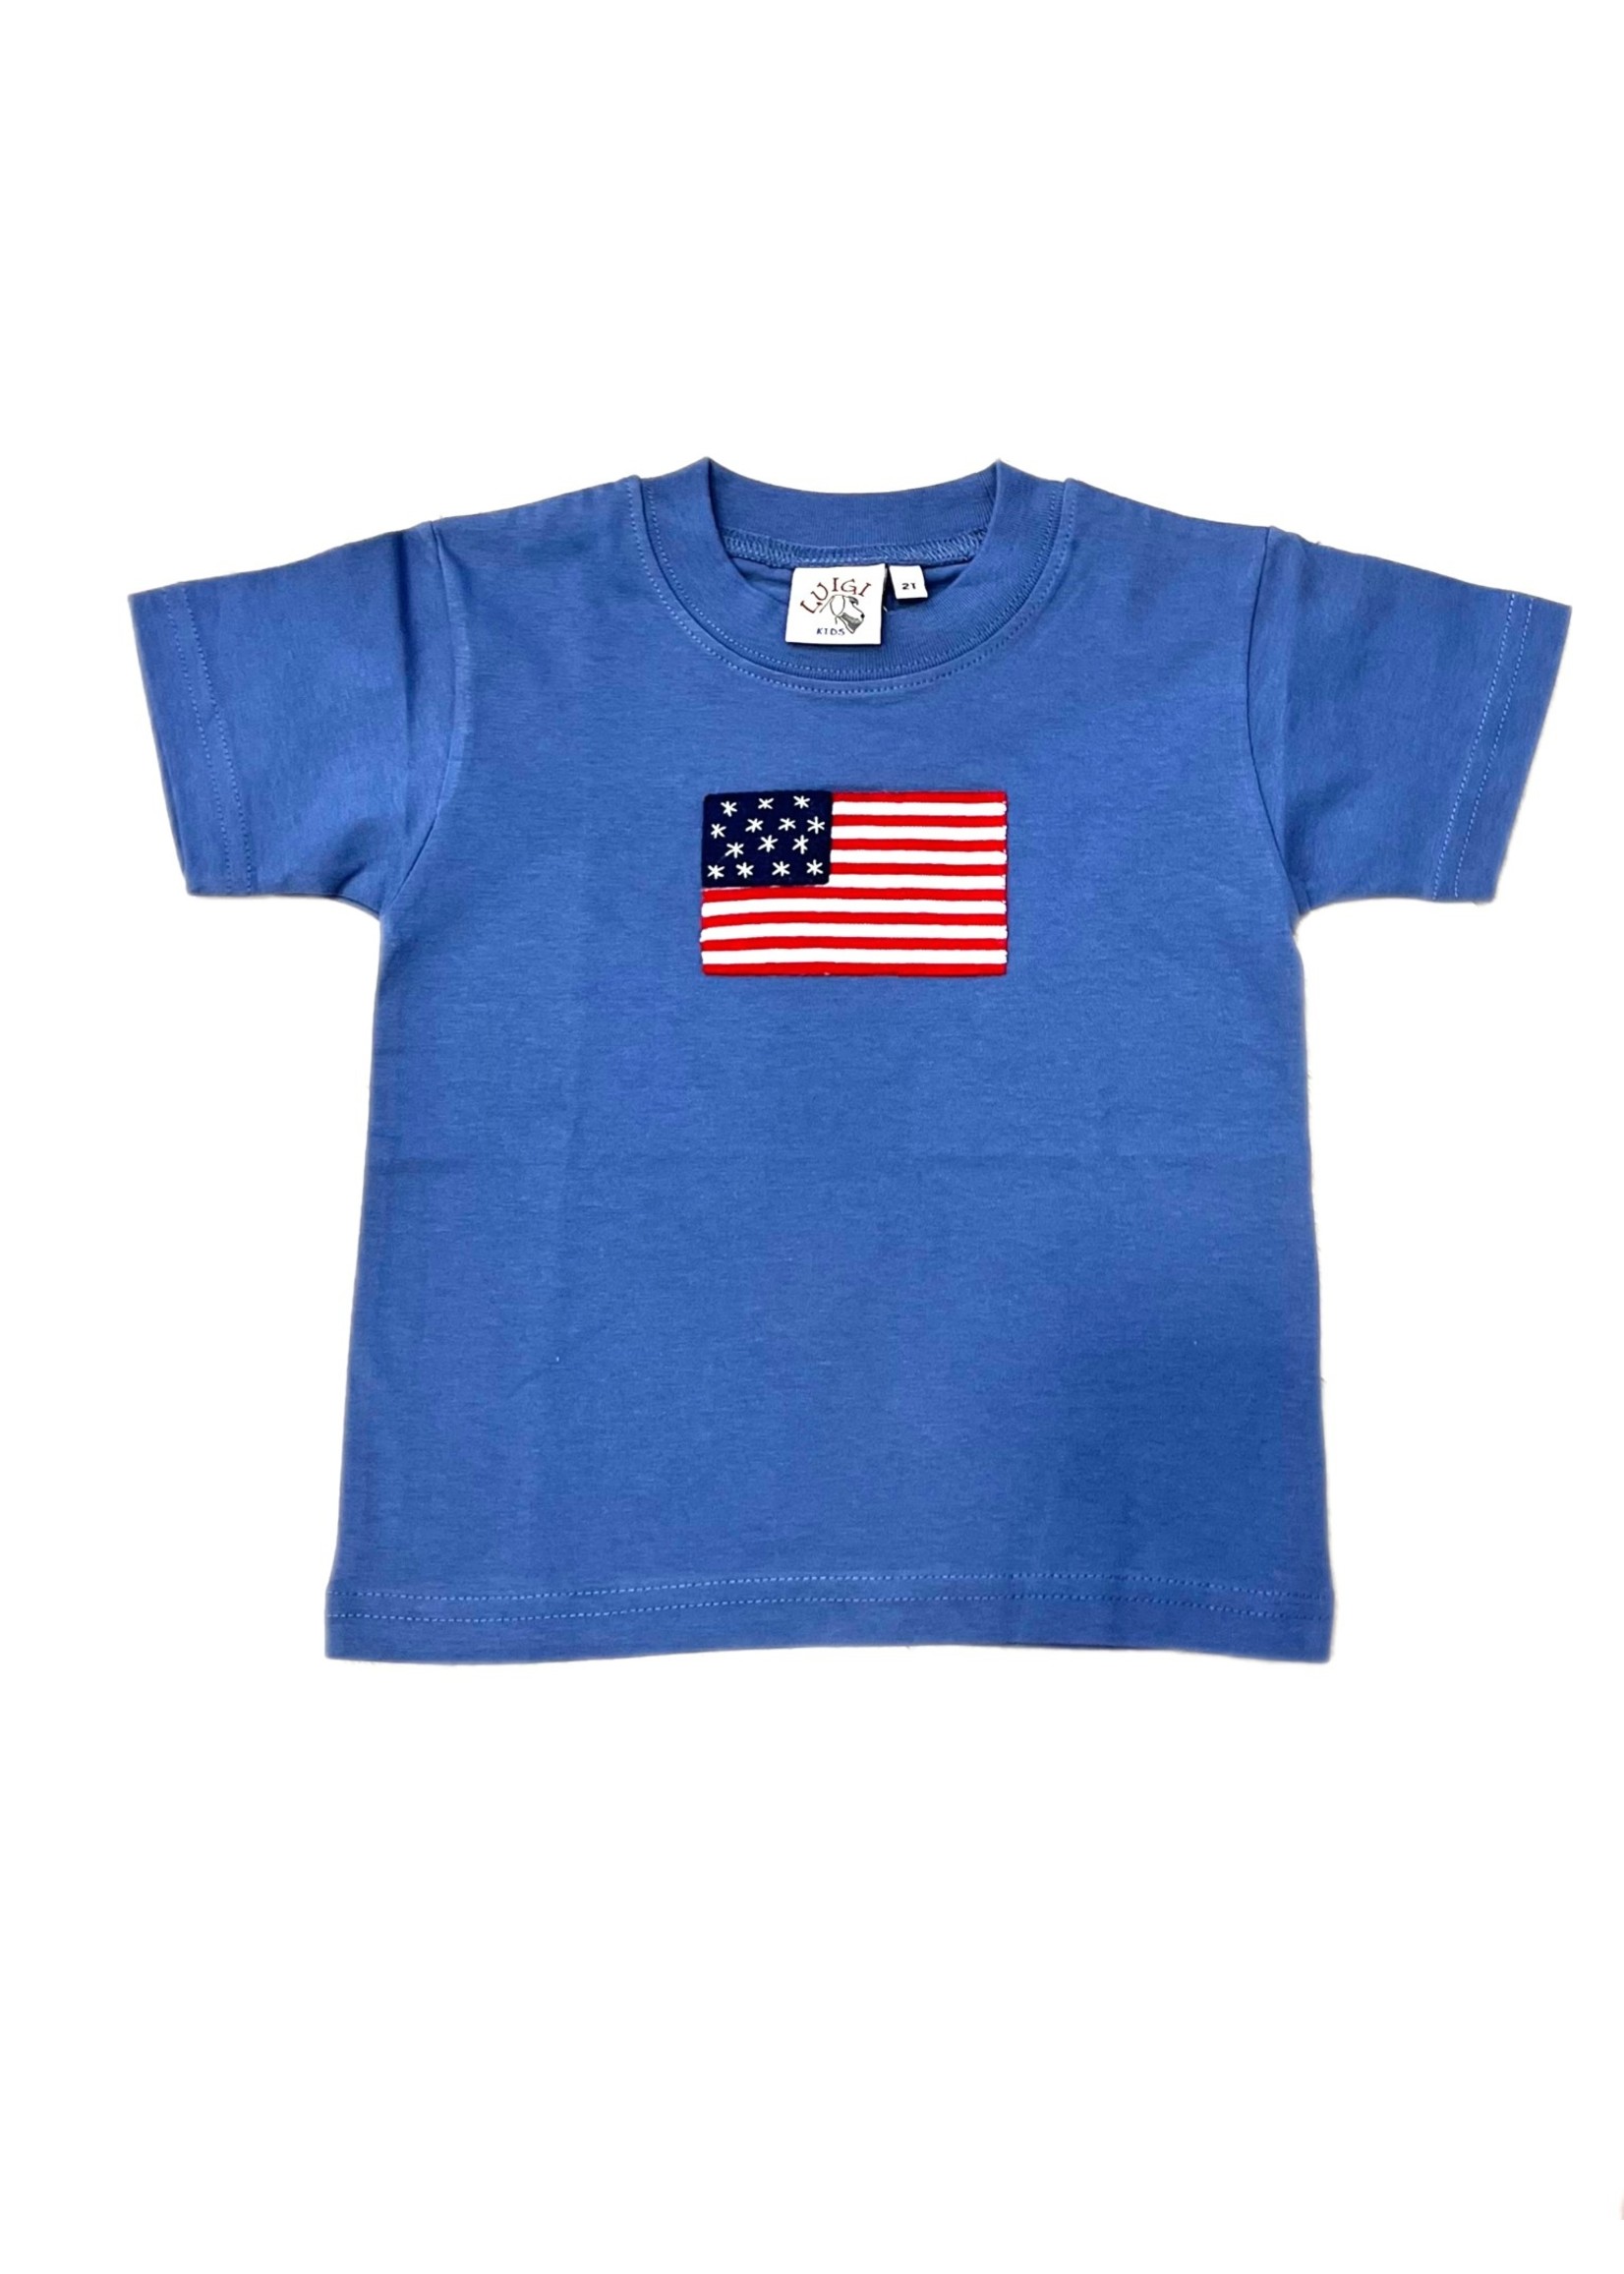 Luigi Kids Blue American Flag Shirt